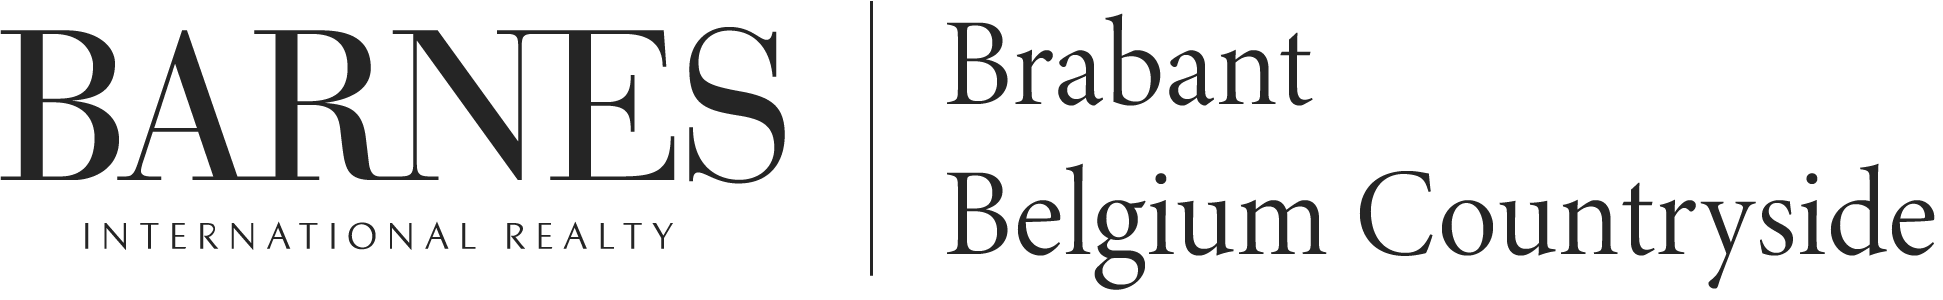 Barnes Brabant logo